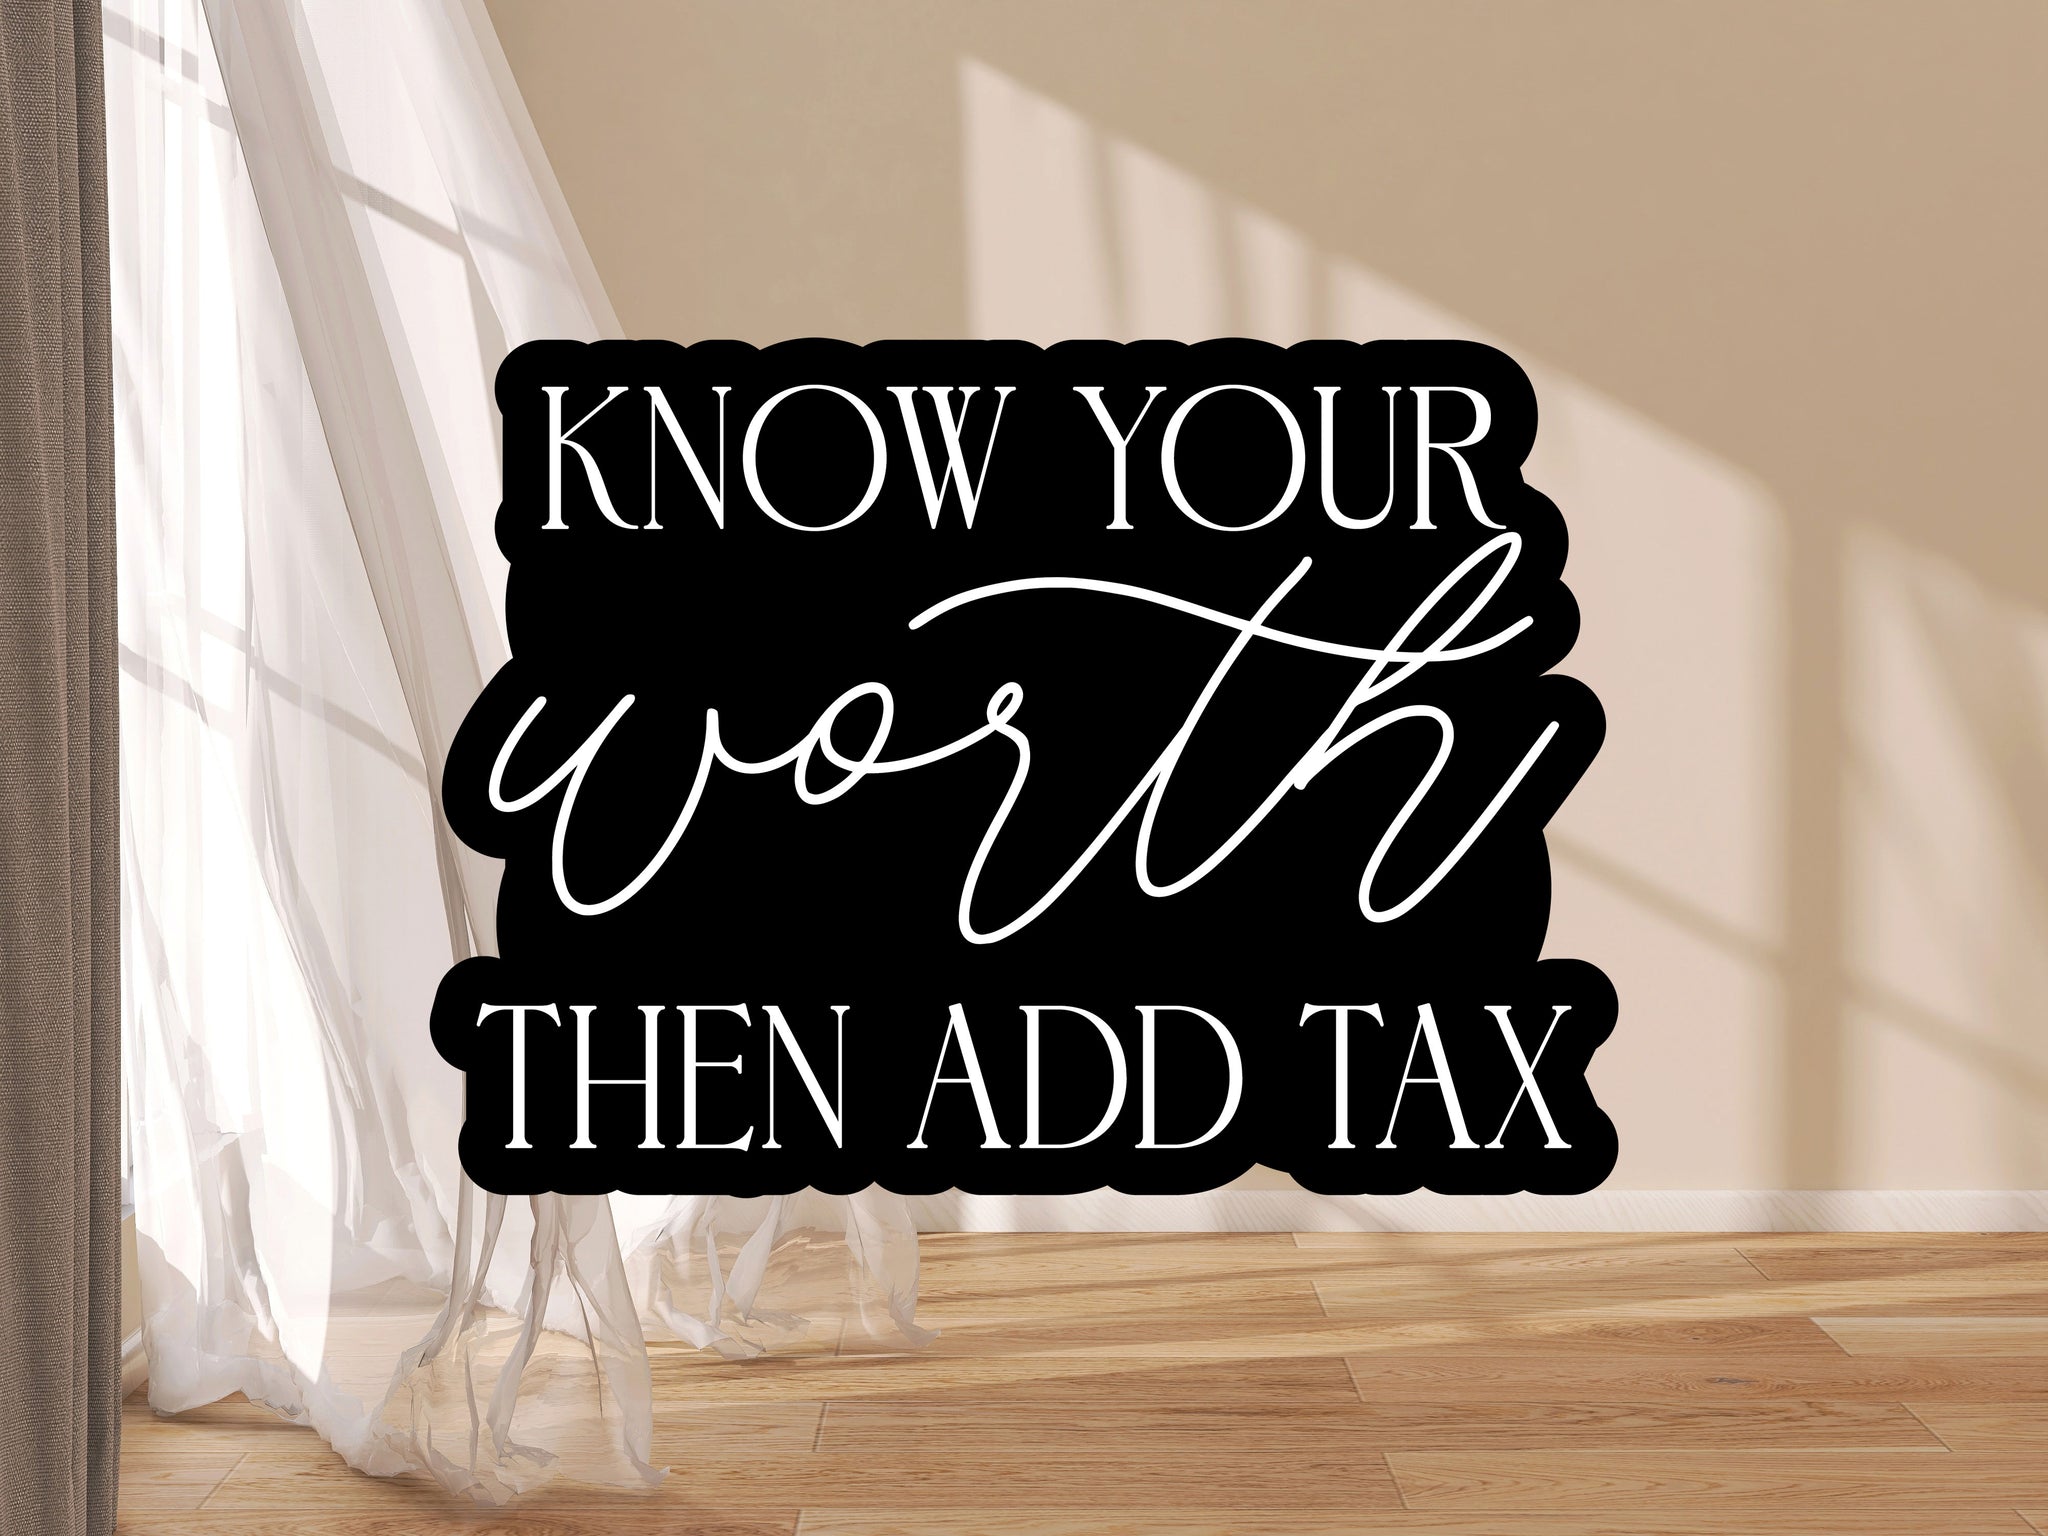 Sticker Know Your Worth Then Add Tax